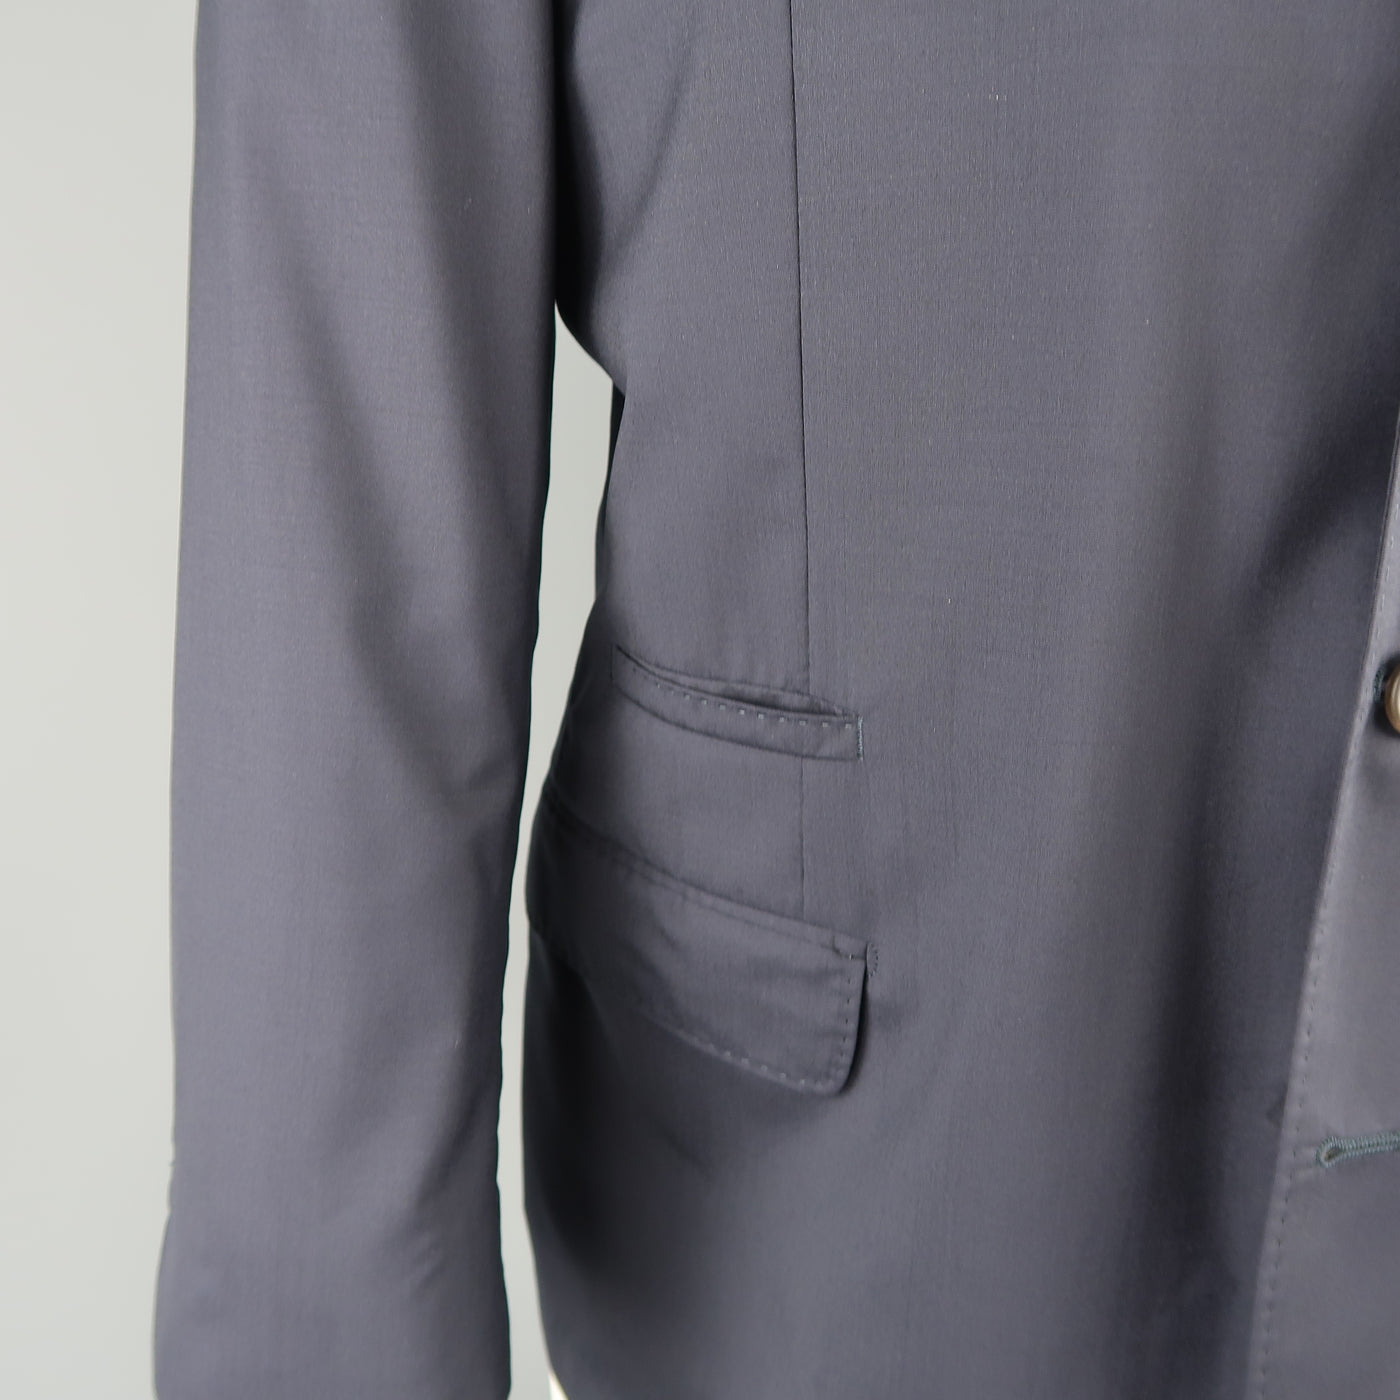 BRUNELLO CUCINELLI 44 R Navy Wool / Silk Notch Lapel Sport Coat